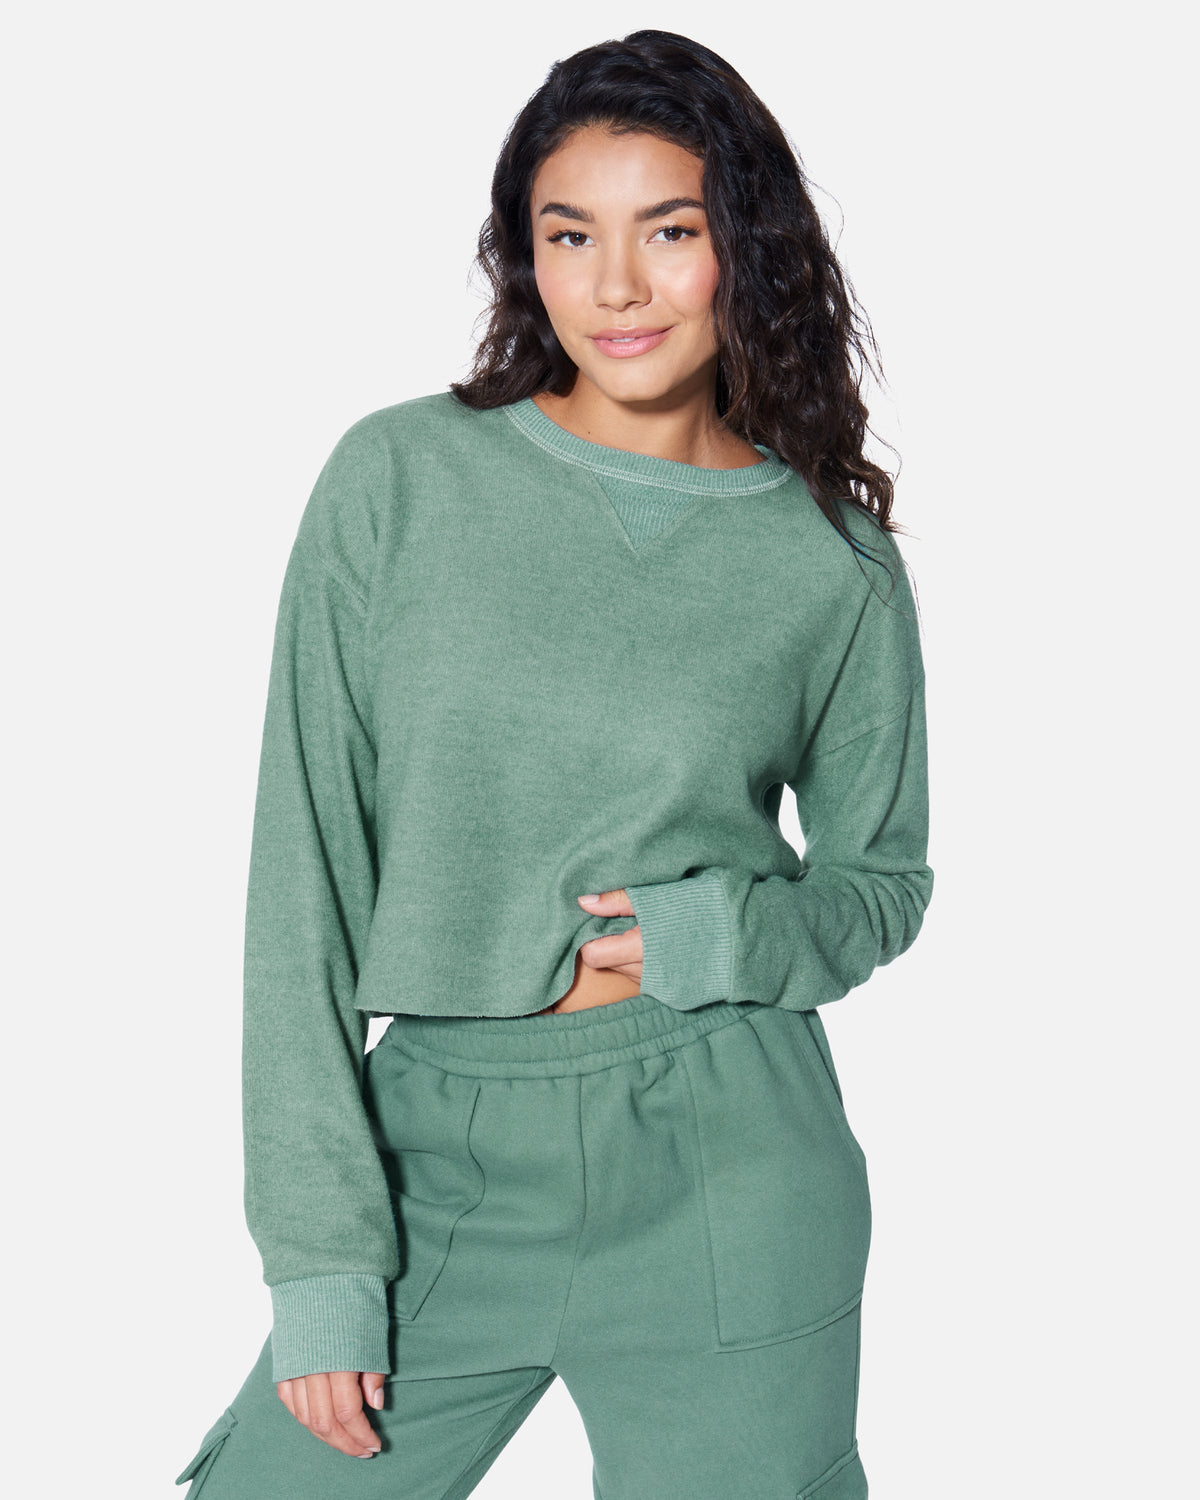 Women\'s Tops | Hurley Sweaters - Shirts